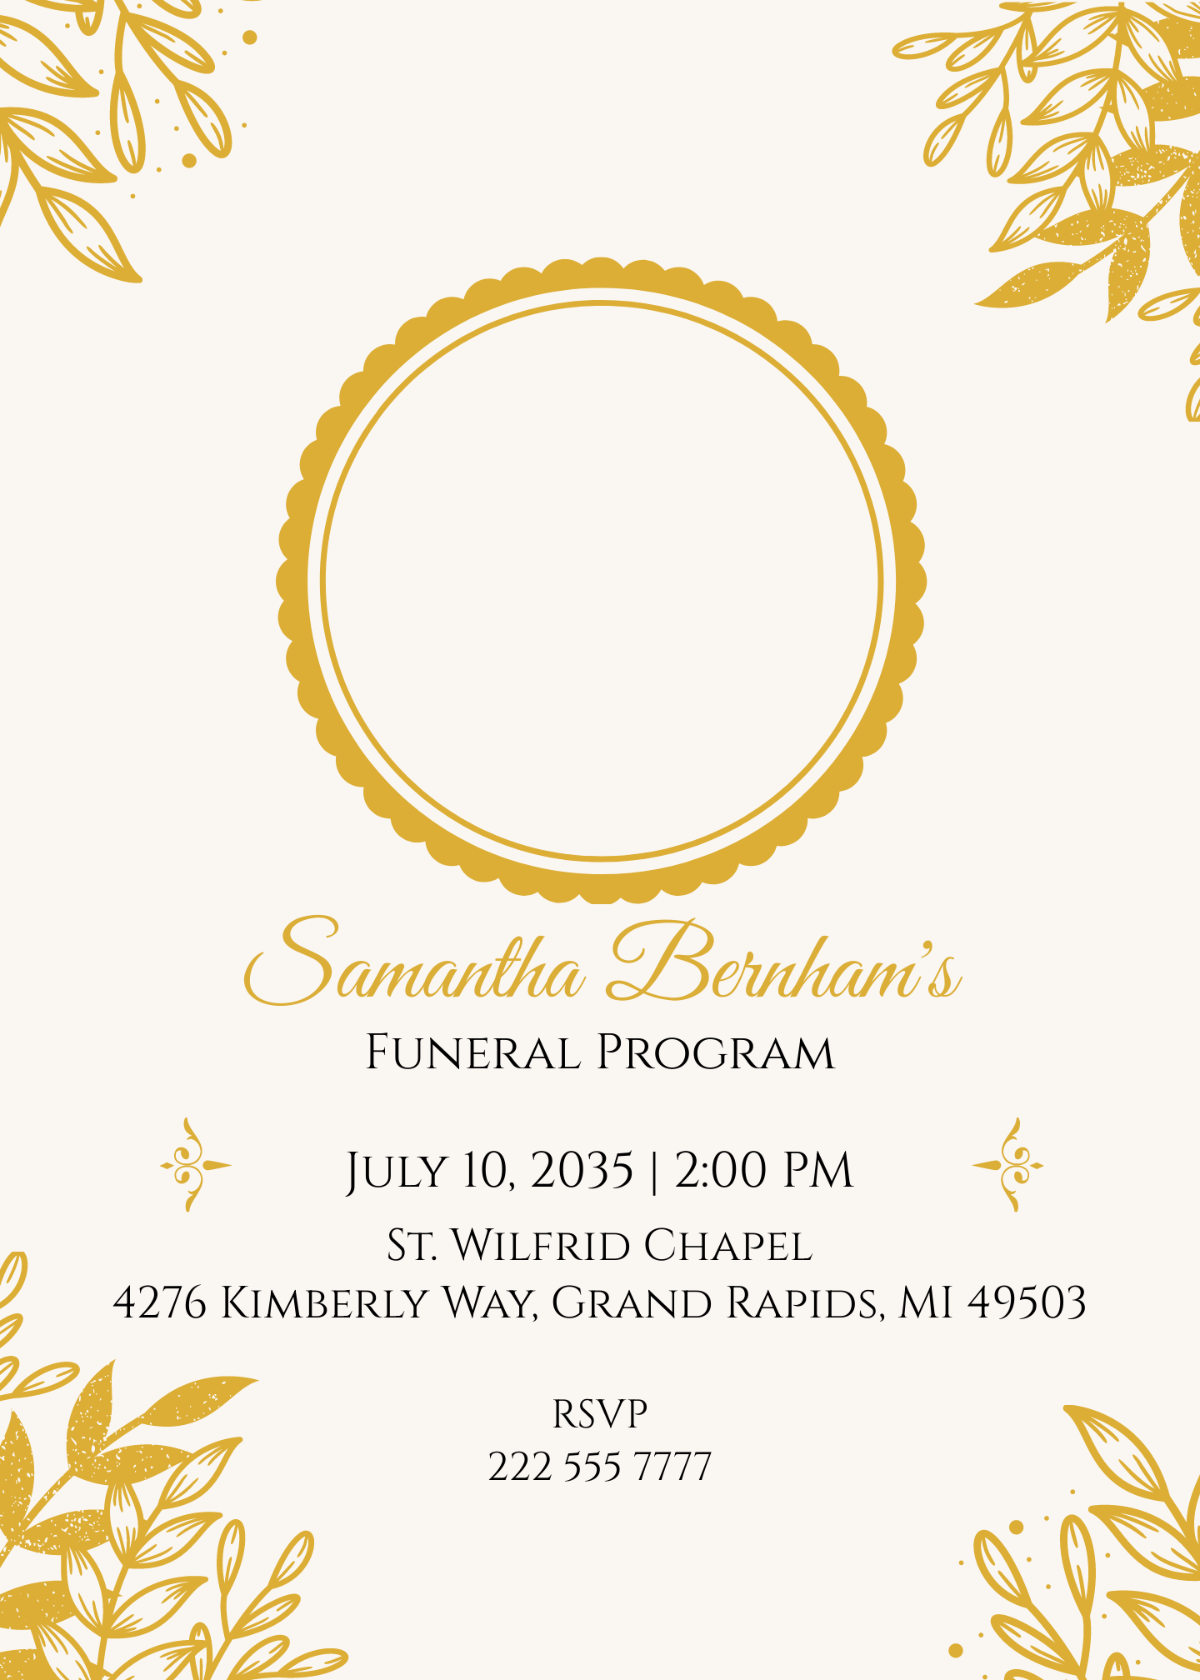 Funeral Program Invitation